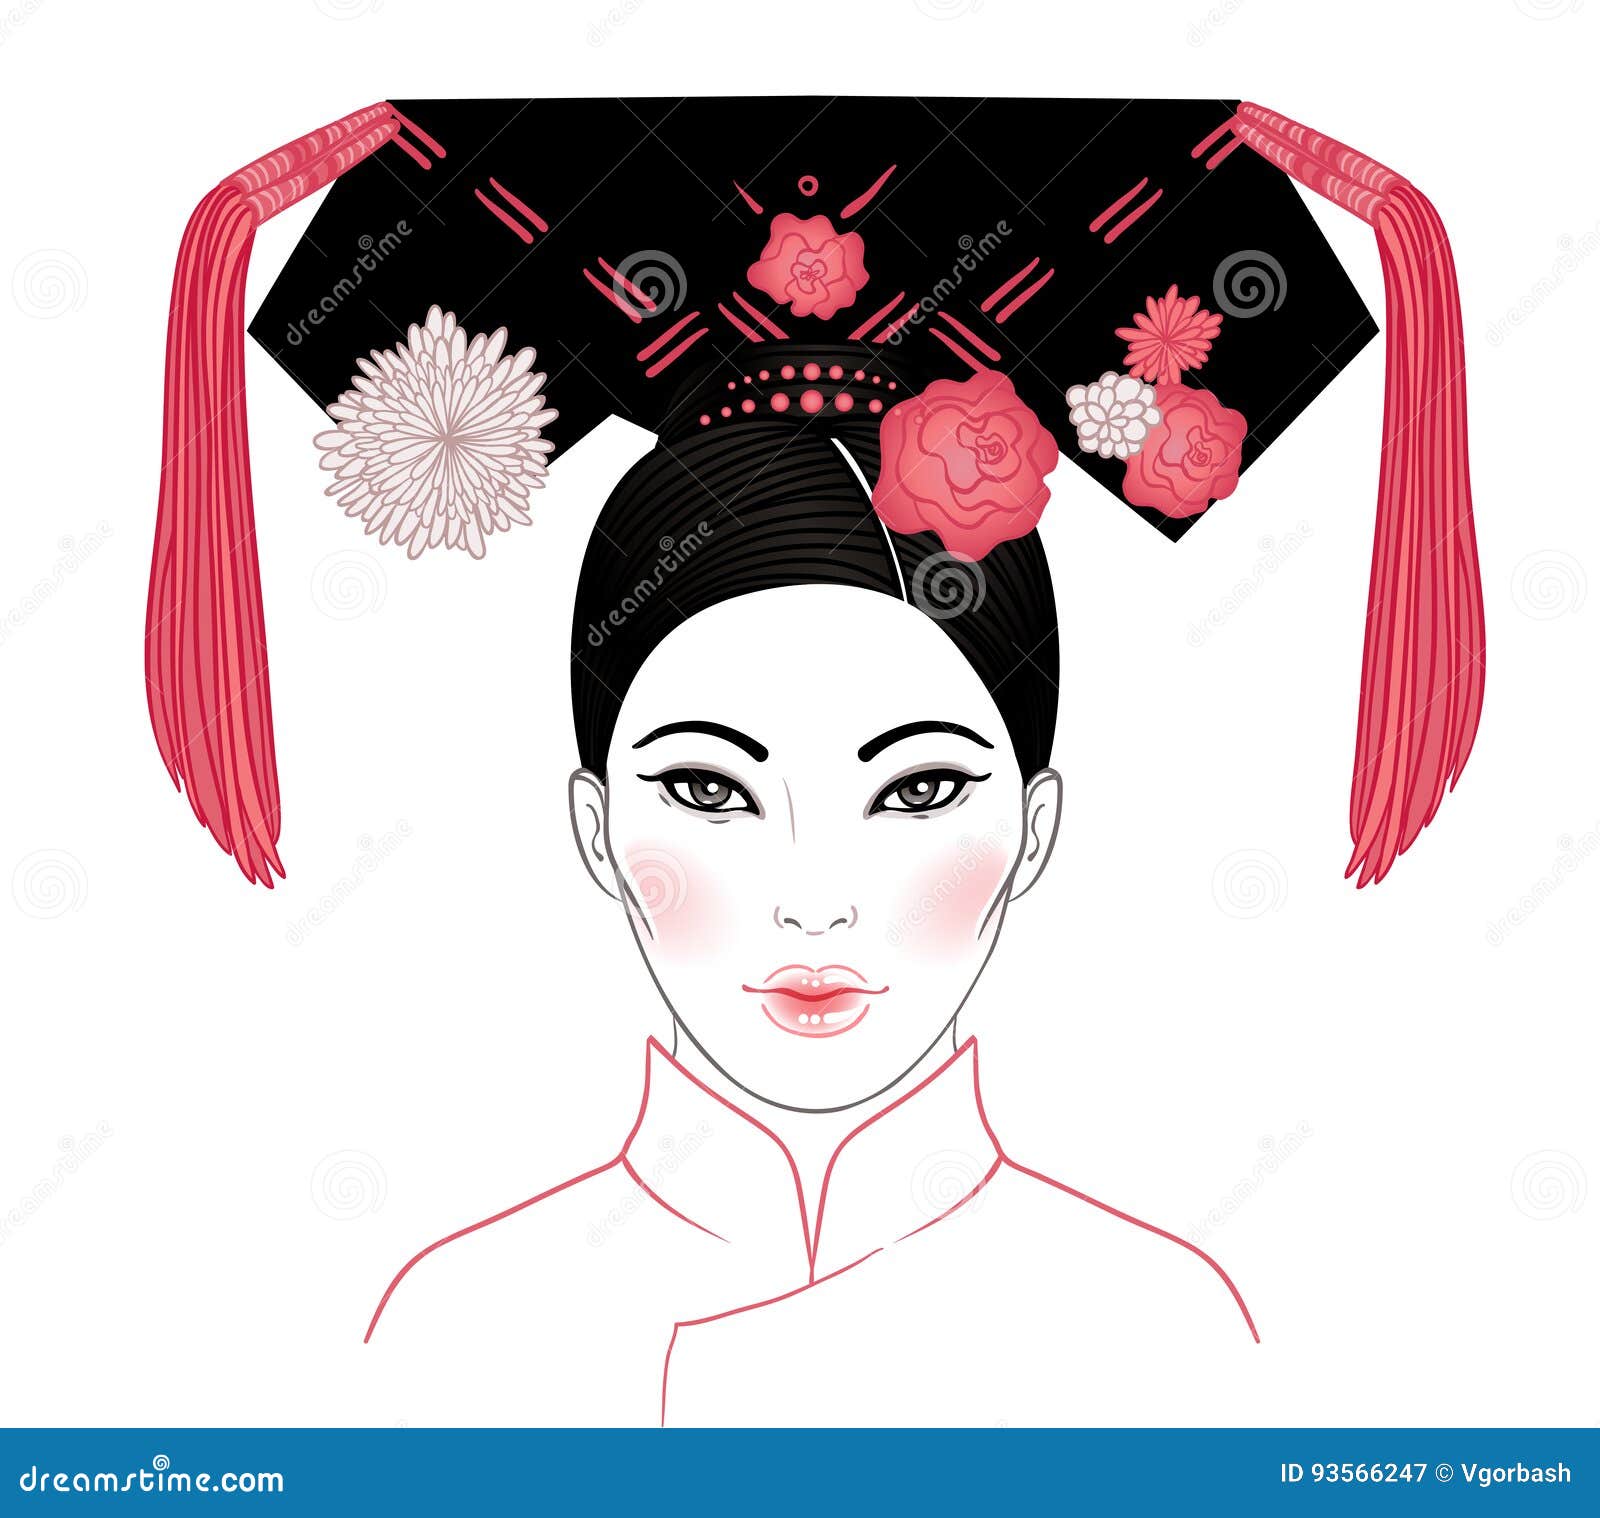 my hanfu favorites — @覓本 Chinese hairstyles & hair ornaments throughout...